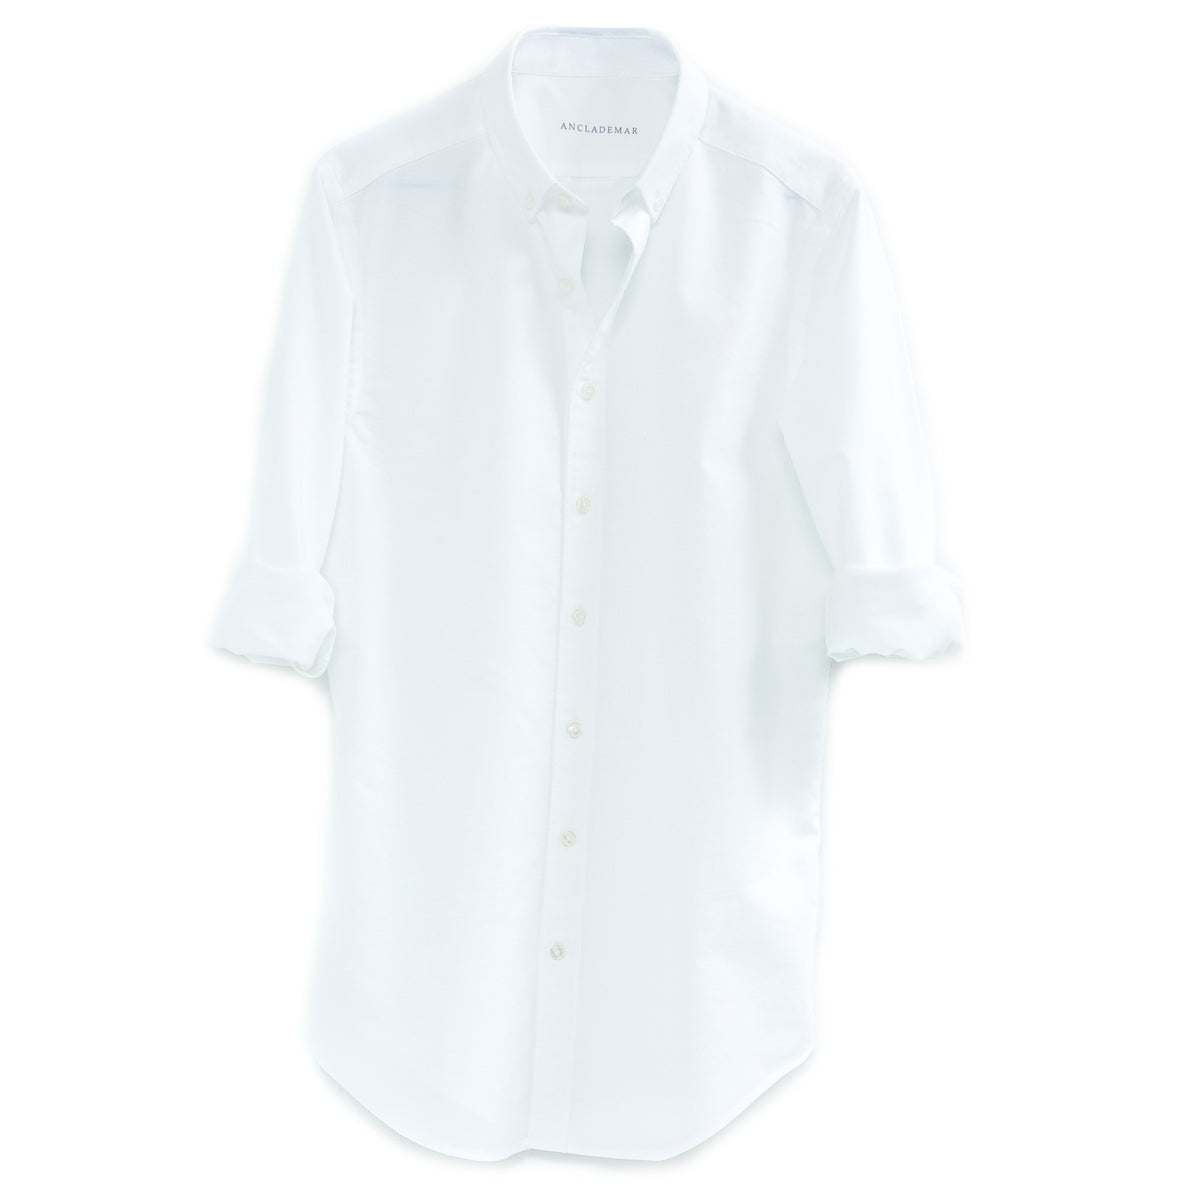 Custom White Oxford Shirt. Store